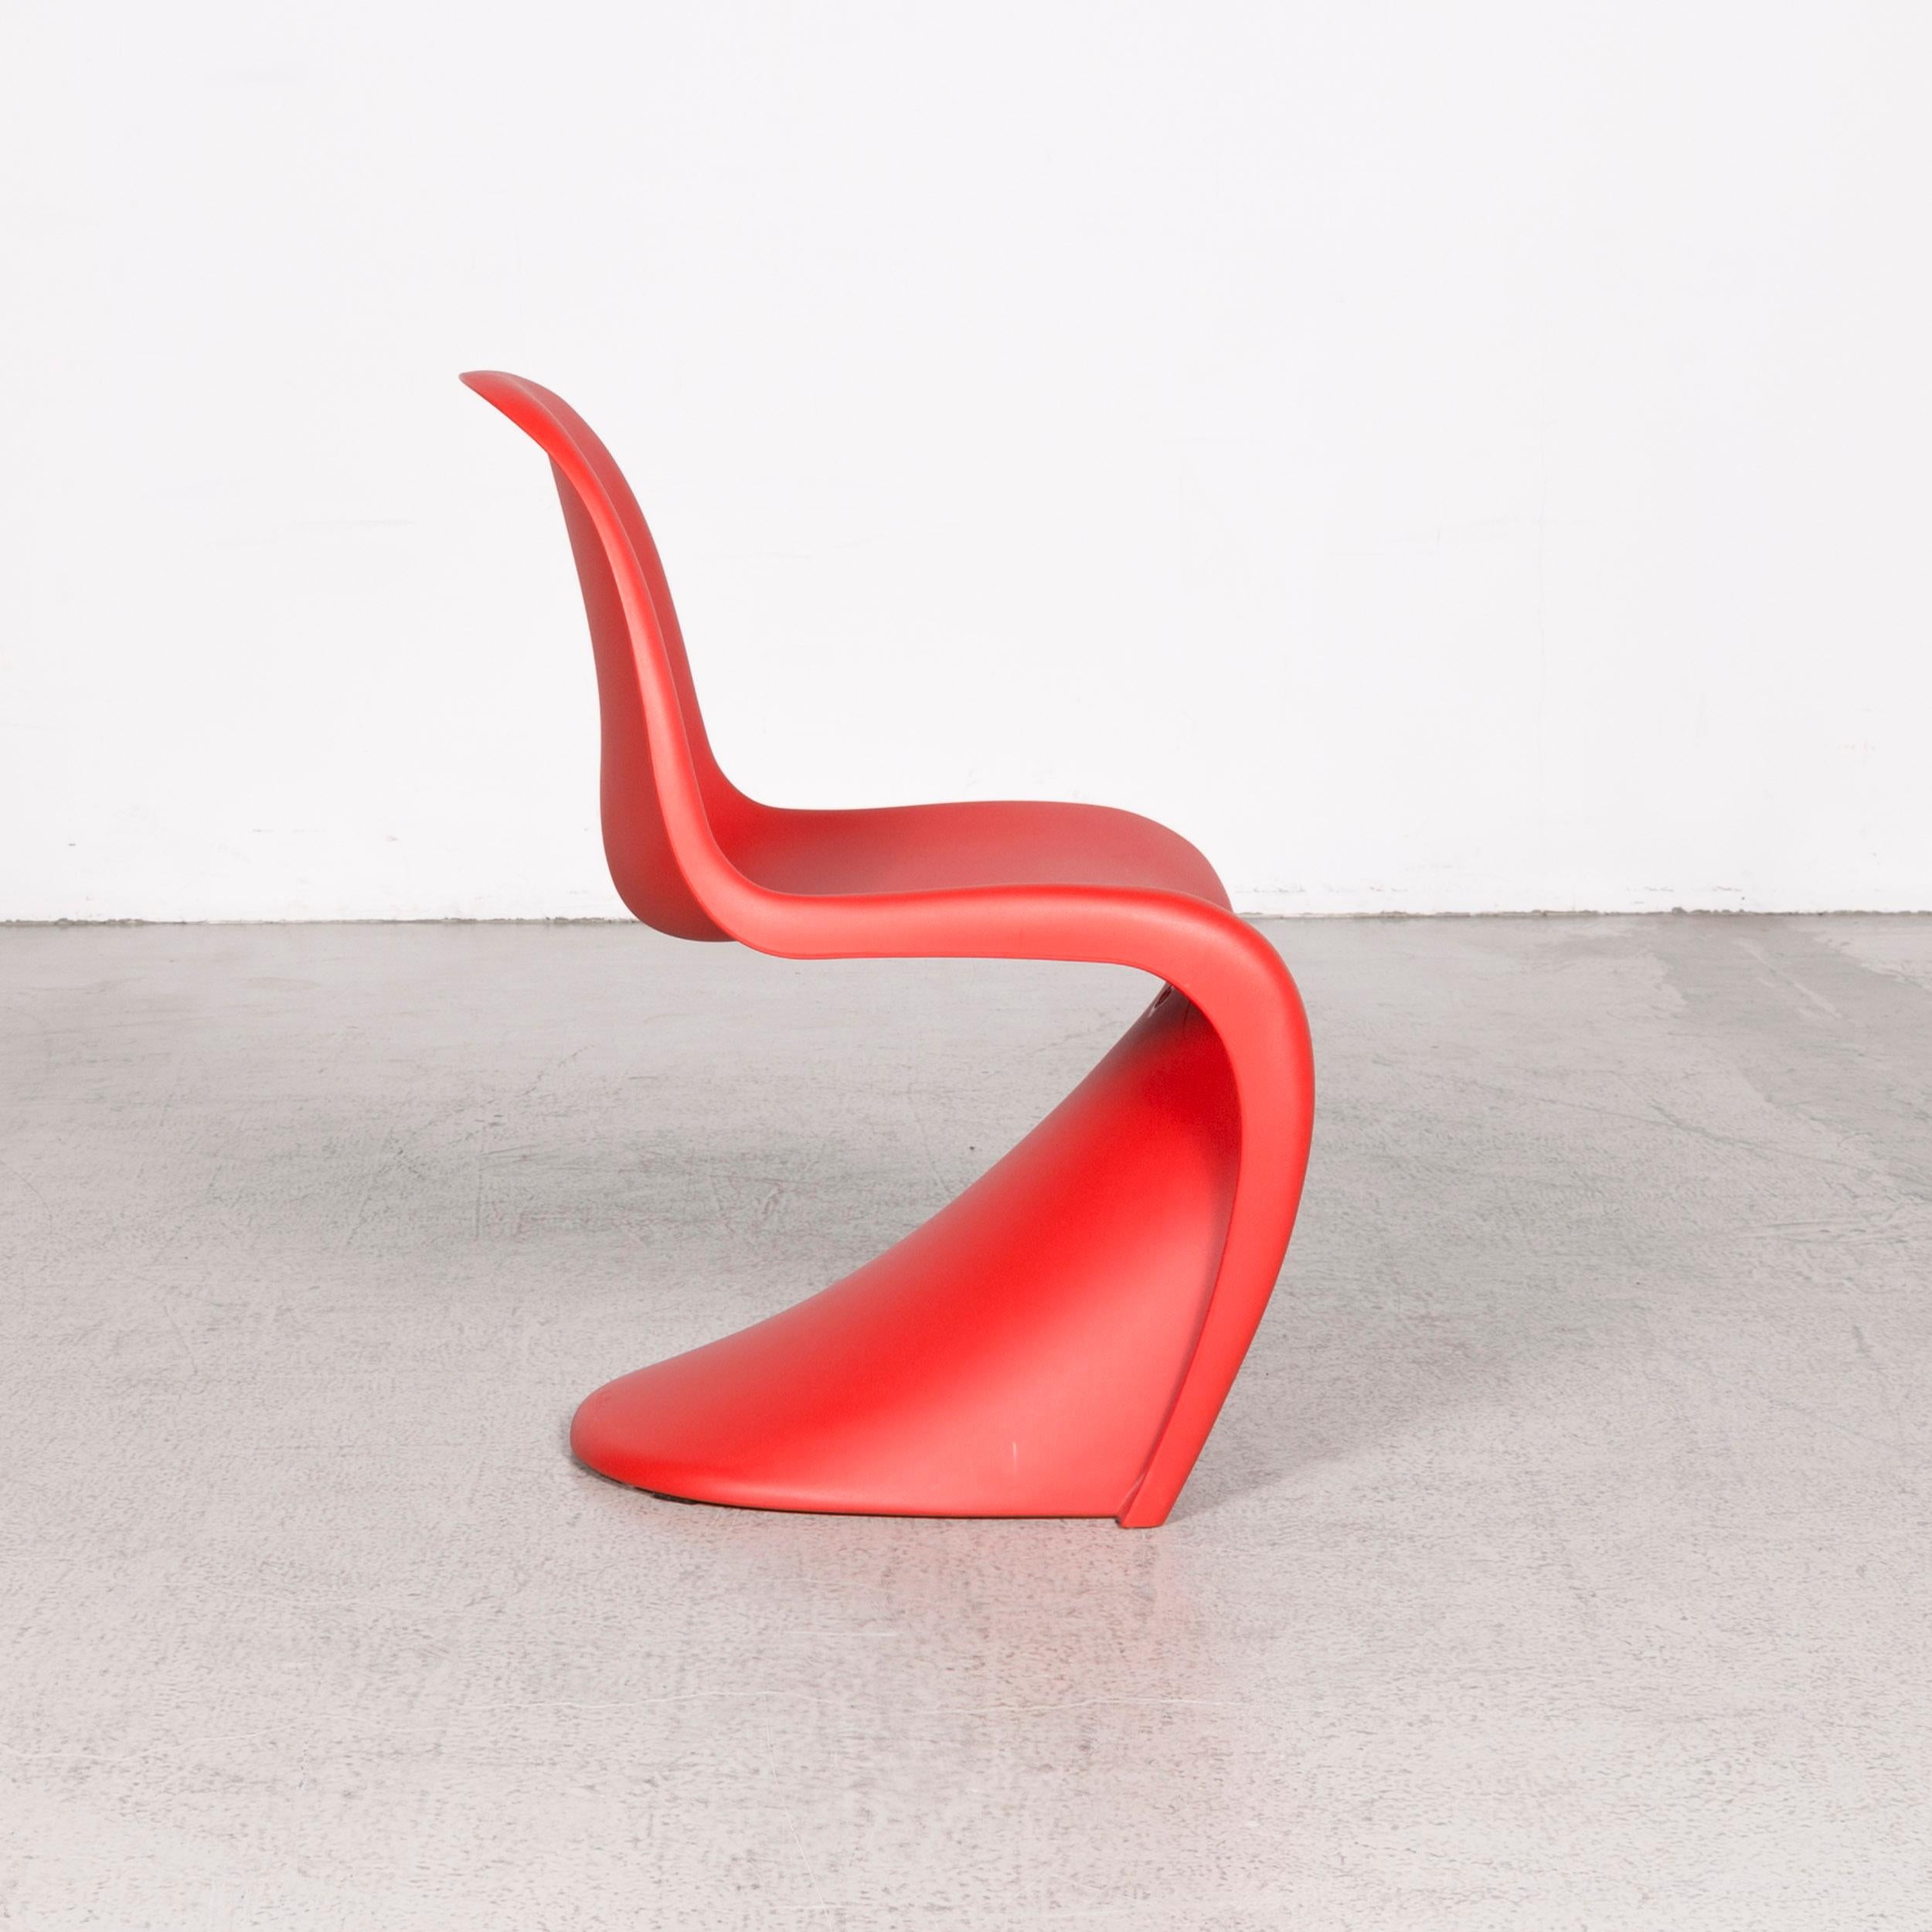 Vitra Panton Chair Designer Plastic Armchair Red by Verner Panton Polyproypylen For Sale 1